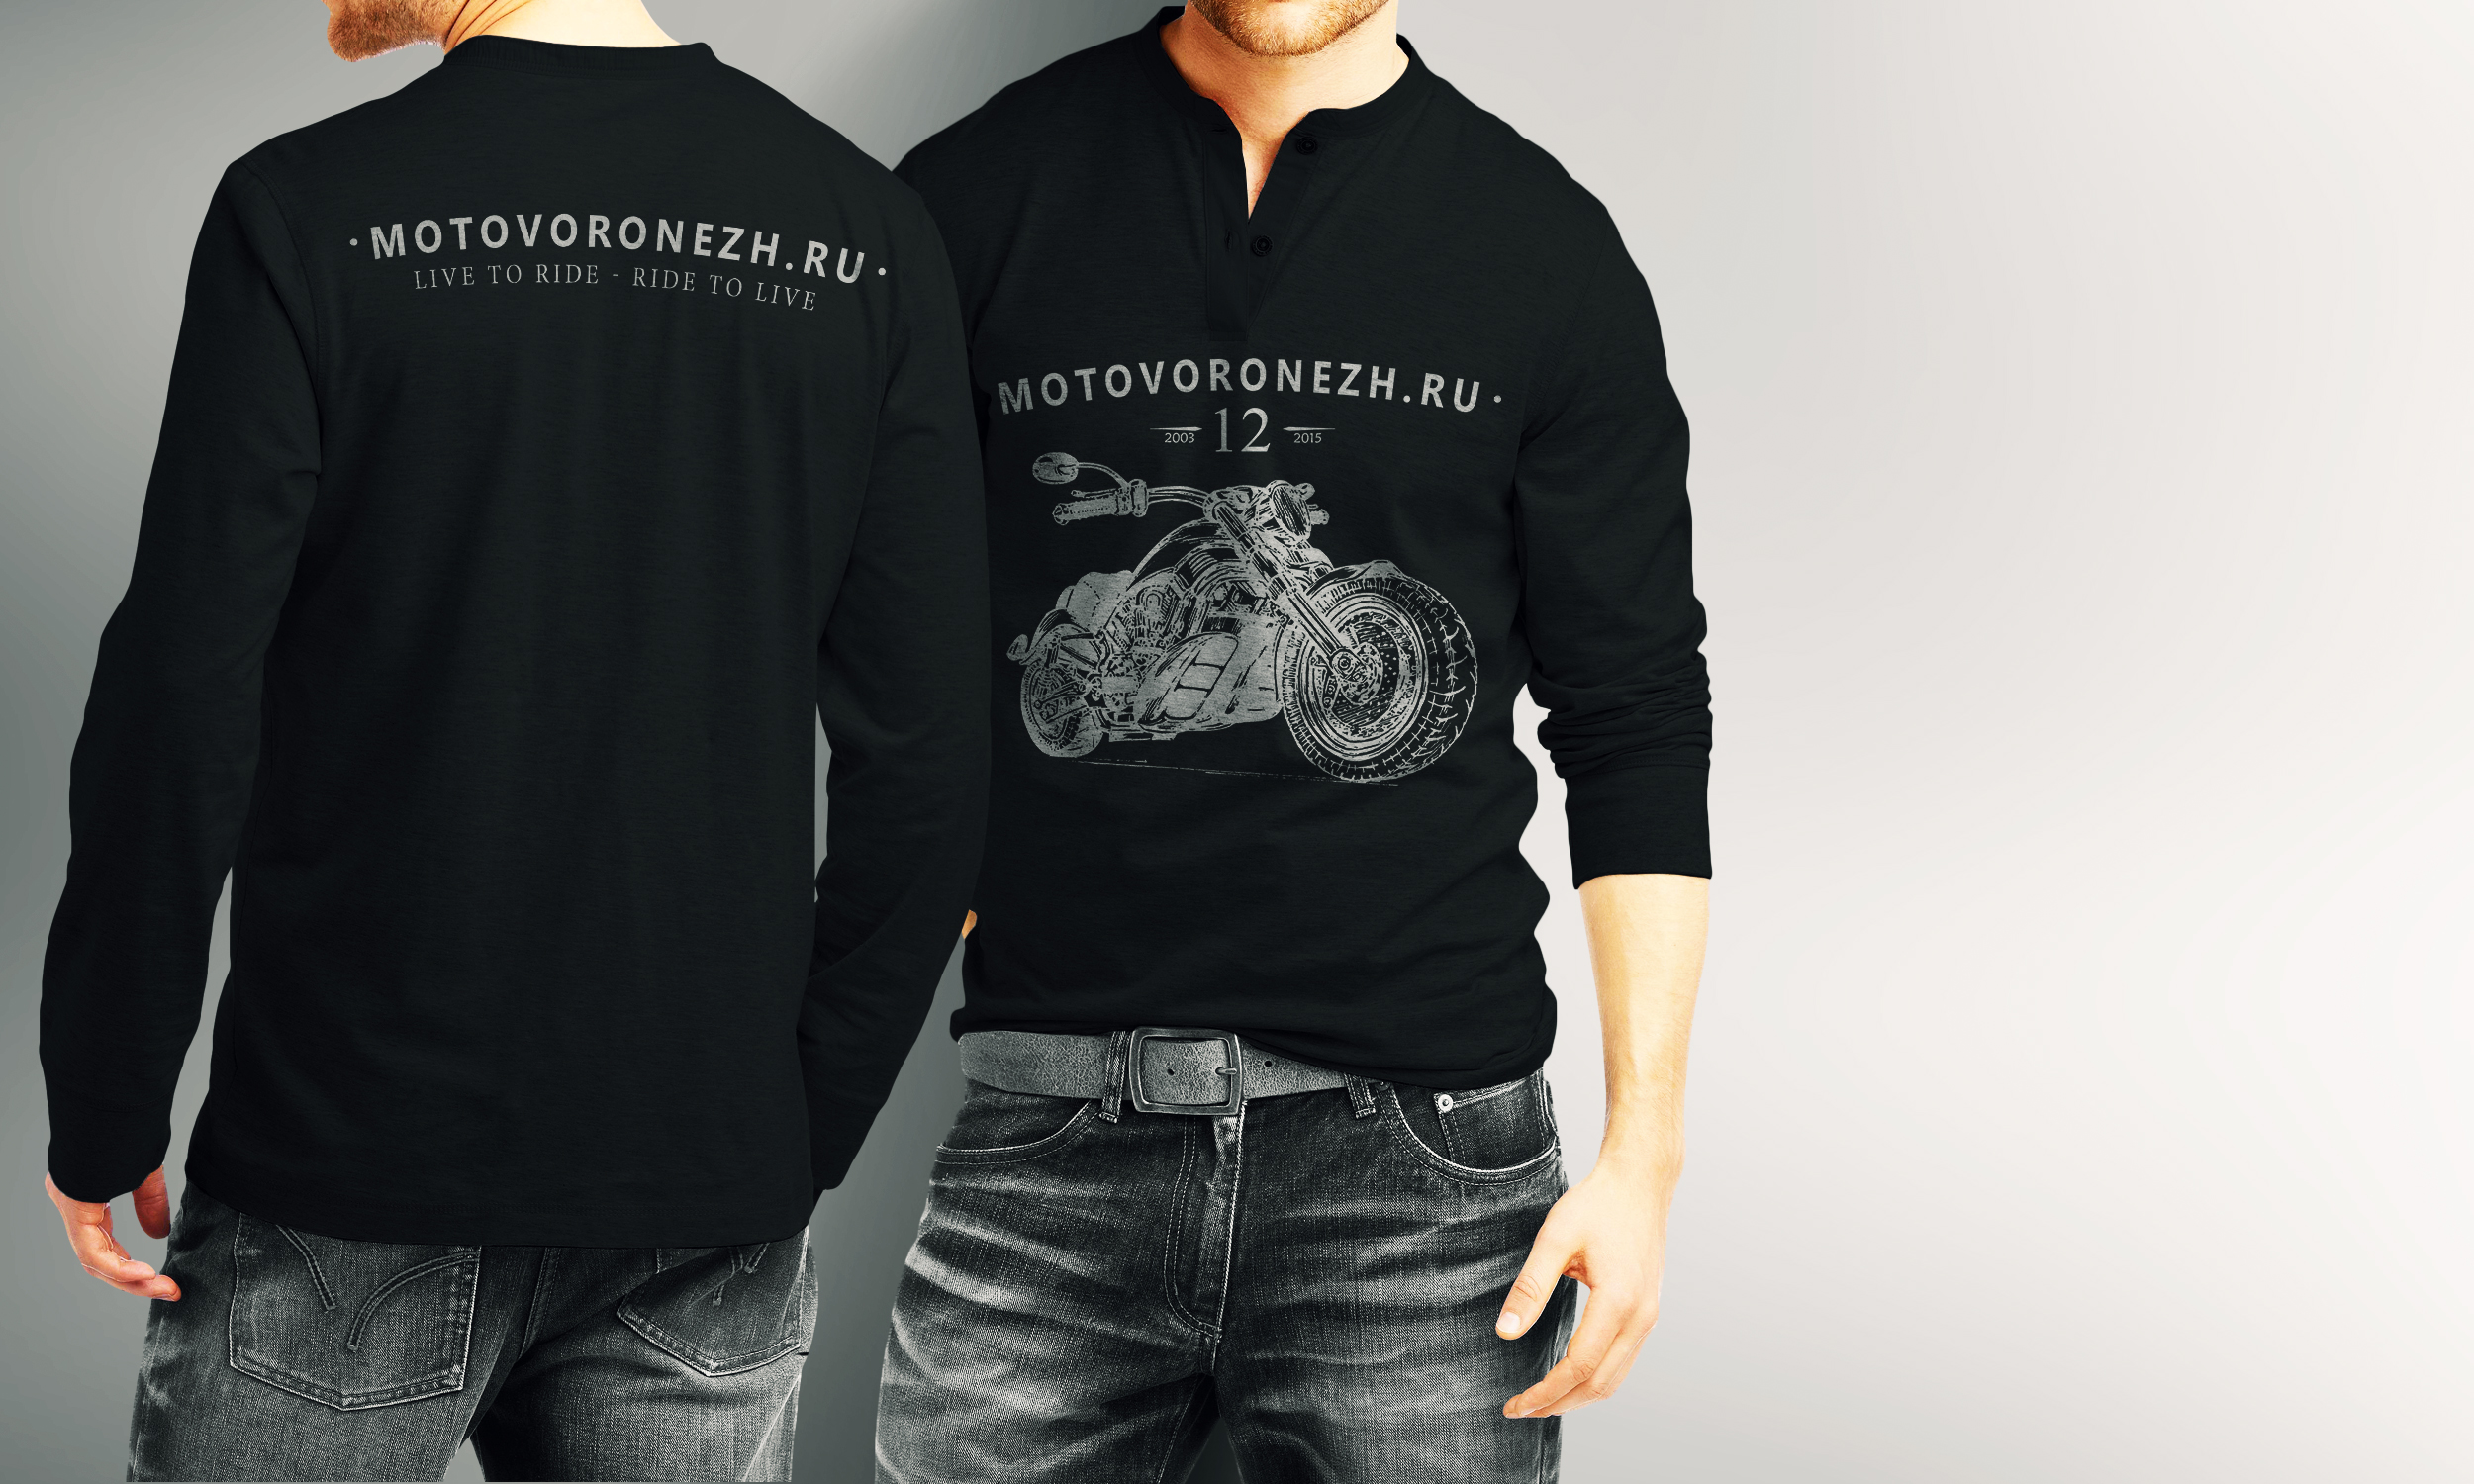 http://motovoronezh.ru/ad/tshirts.jpg